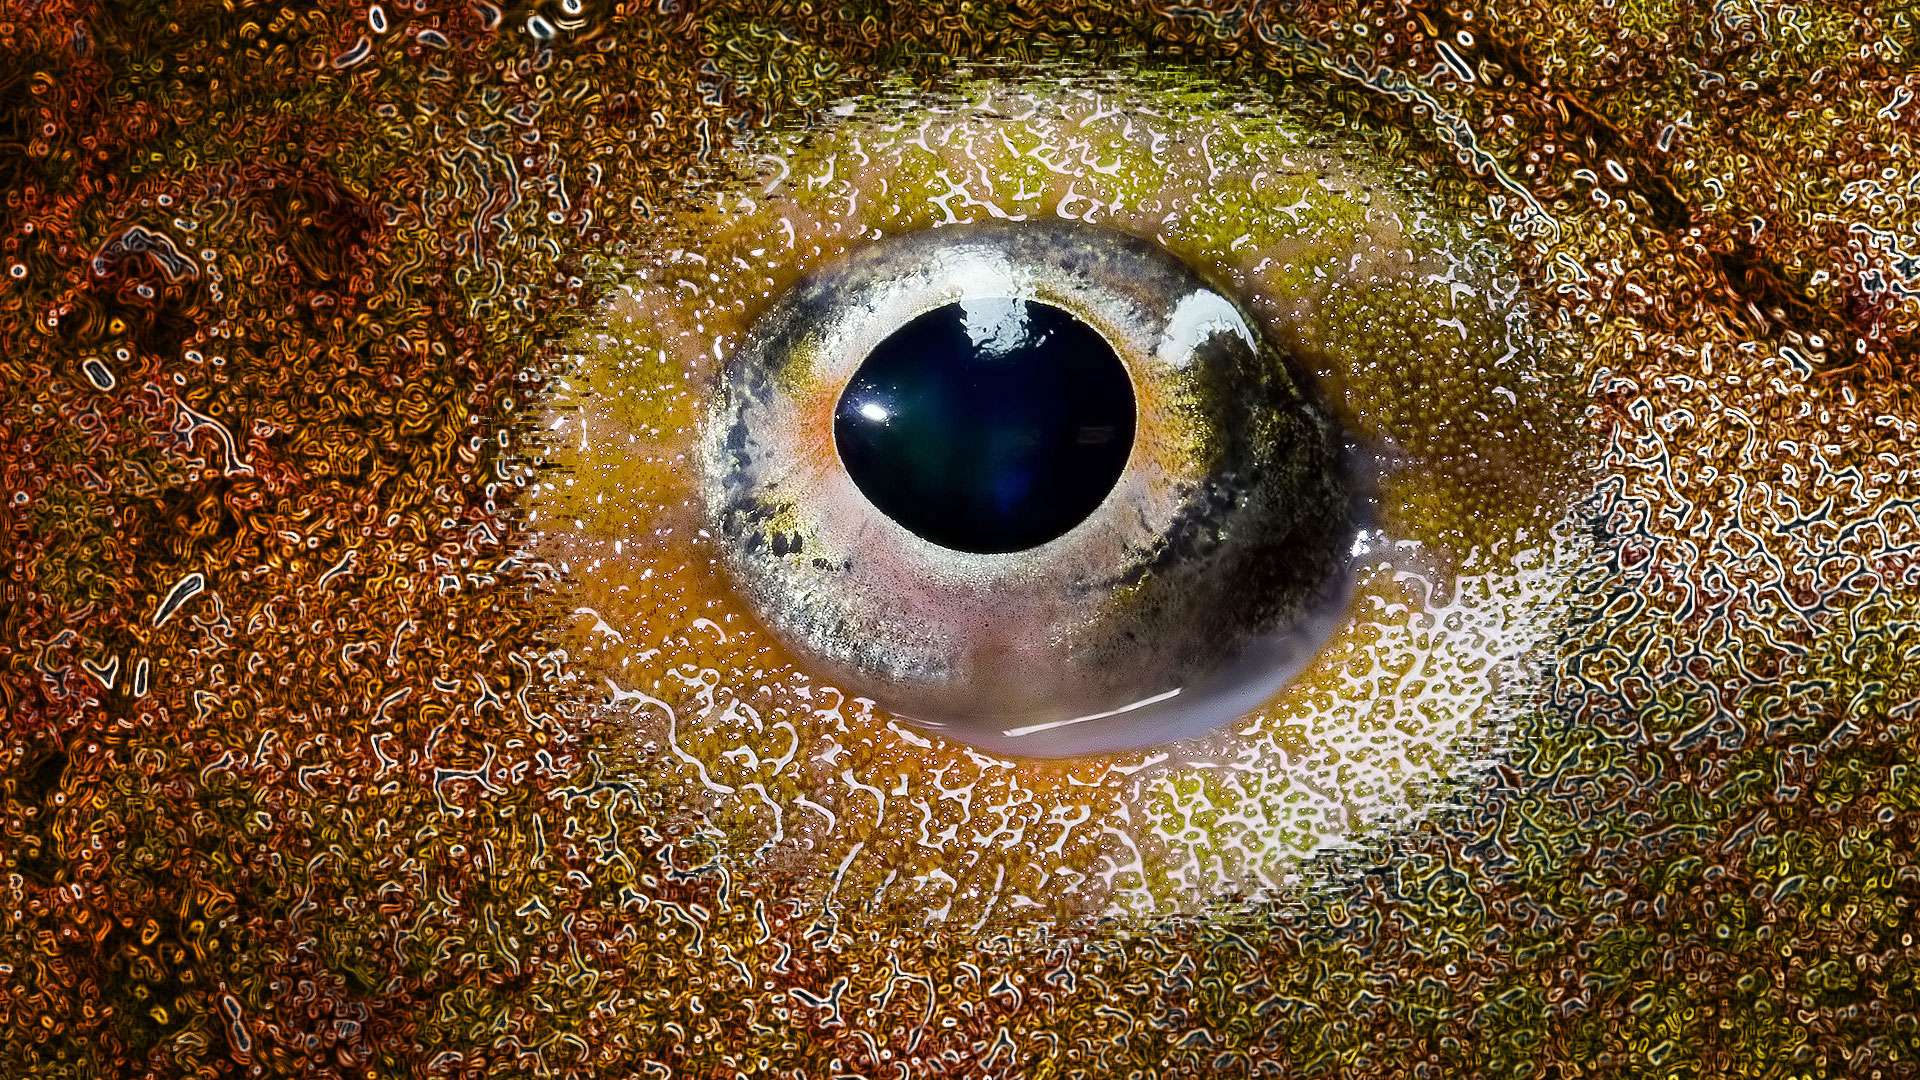 L'œil fixe du poisson - Photos Futura